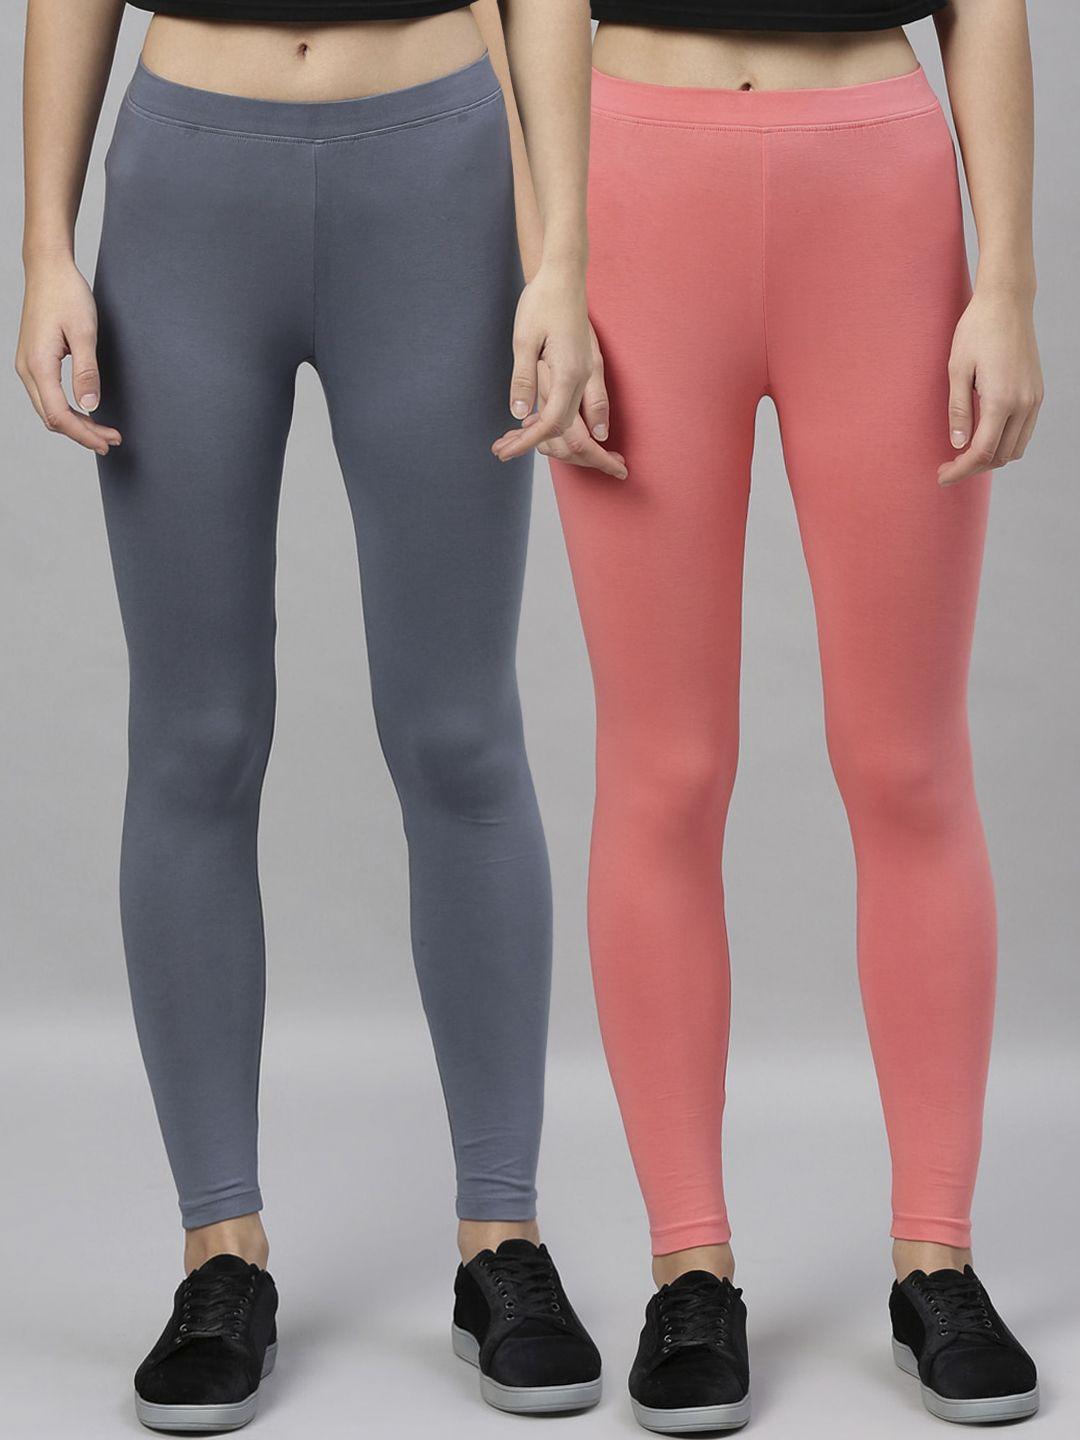 kryptic women pack of 2 solid ankle-length leggings